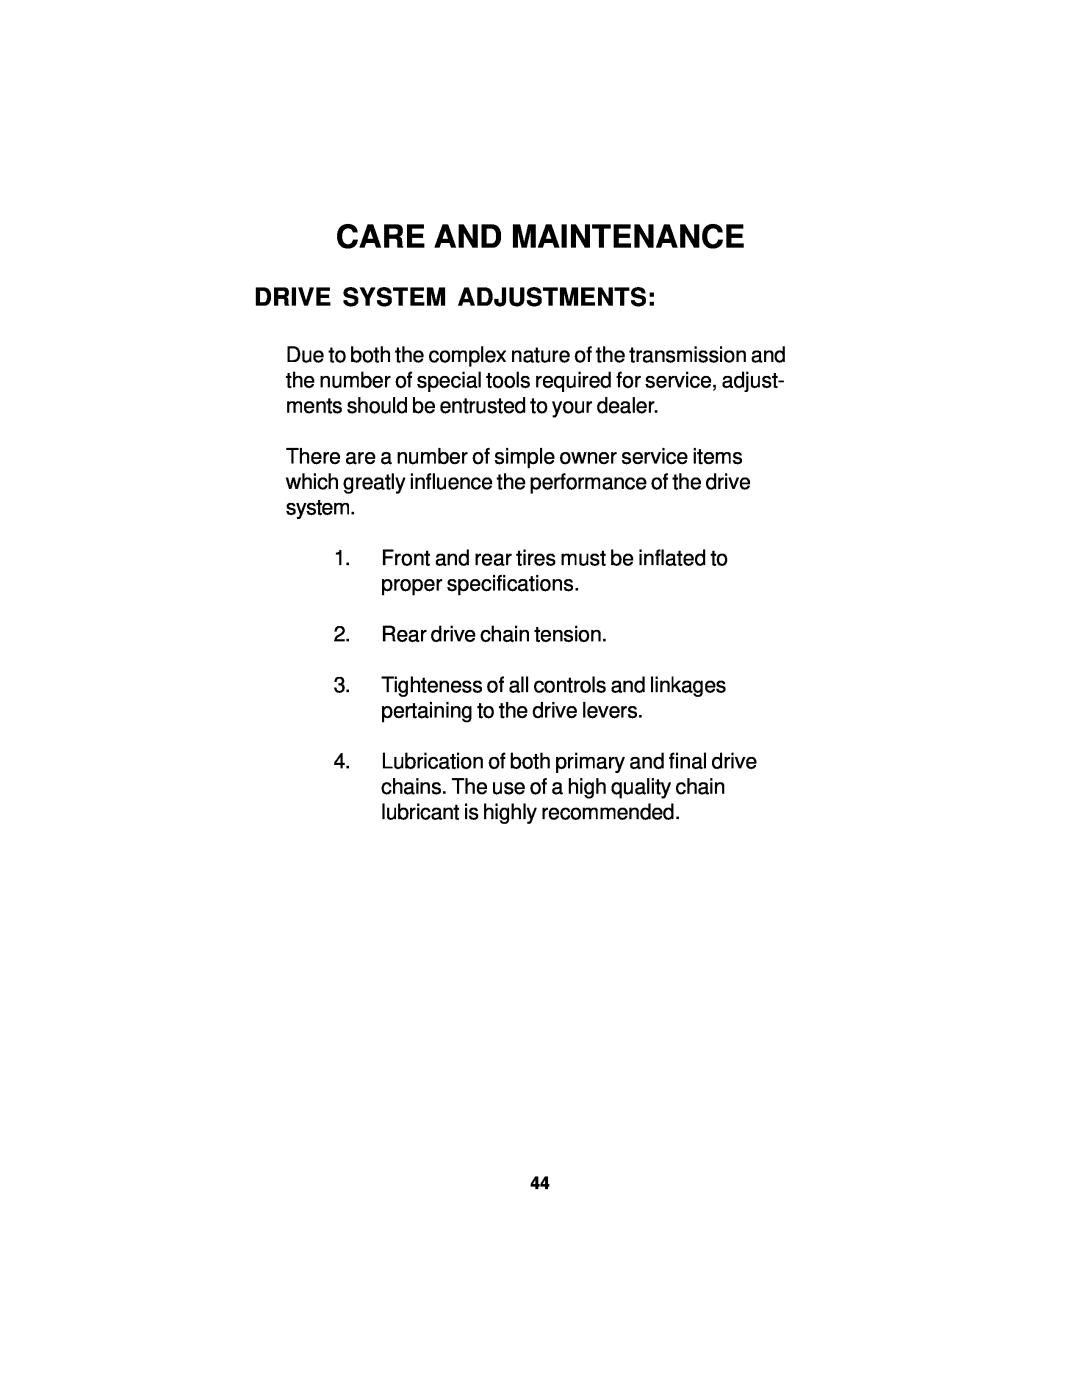 Dixon 14295-0804 manual Drive System Adjustments, Care And Maintenance 